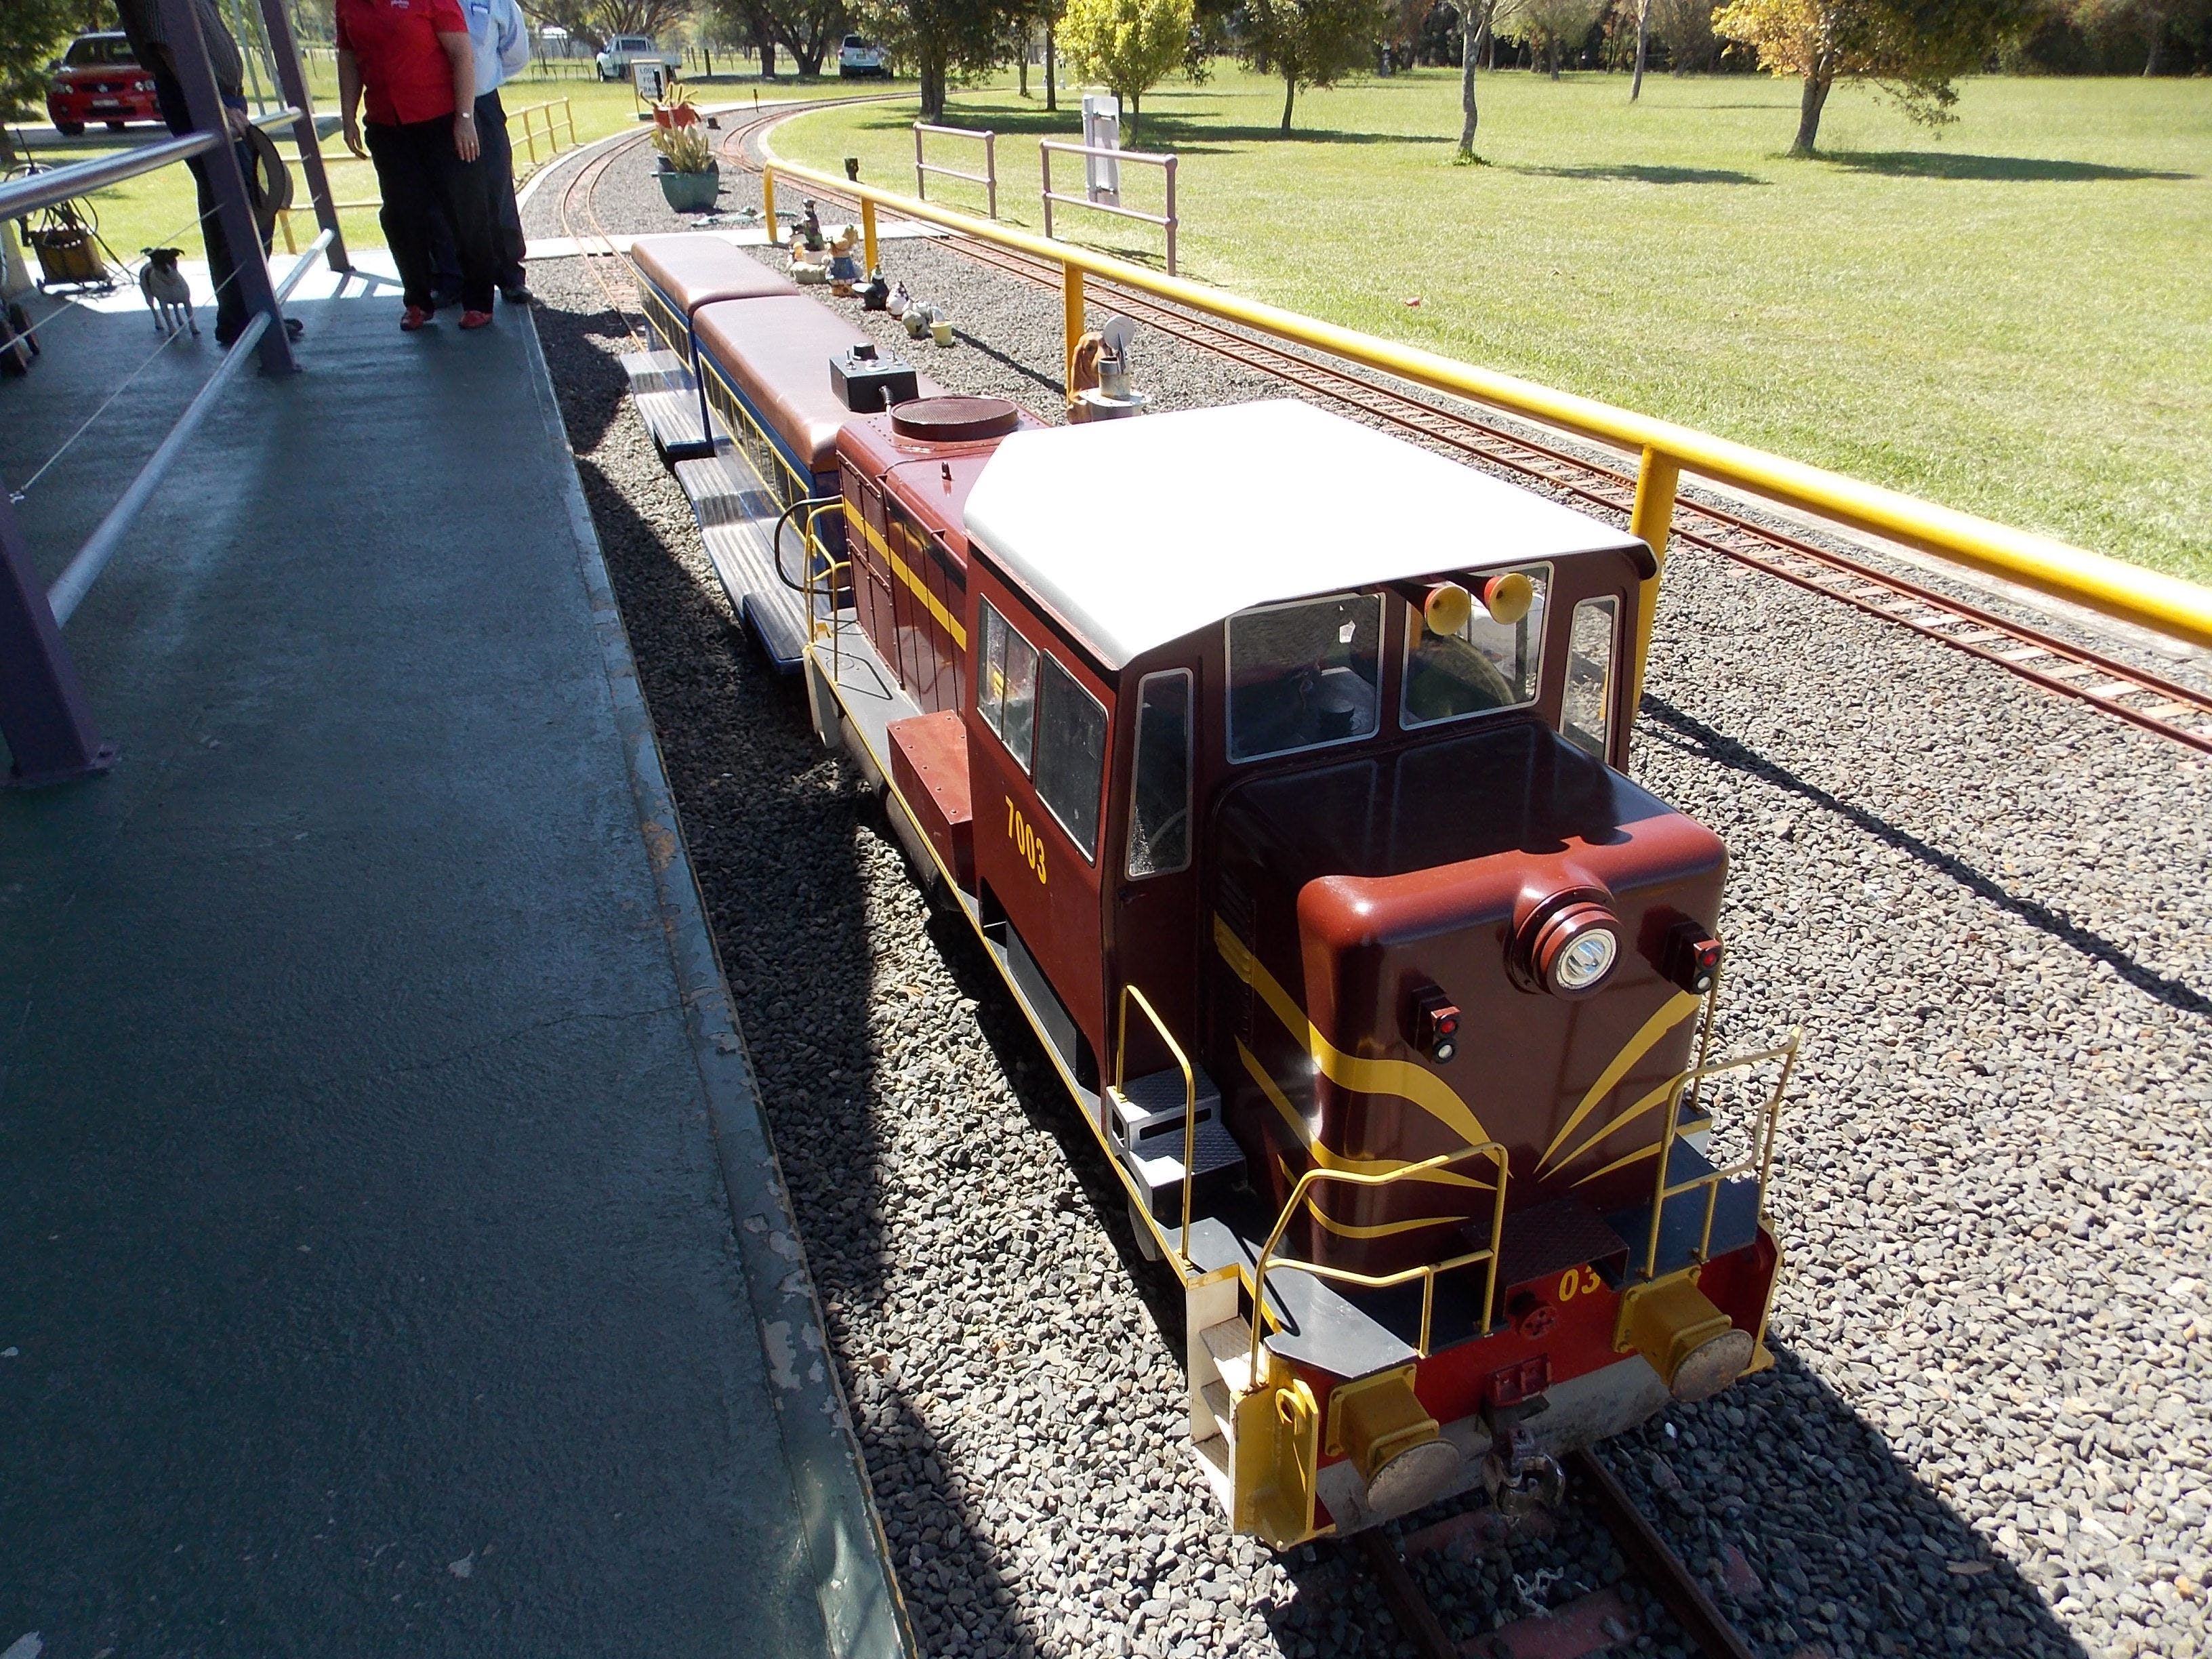 Penwood Miniature Railway - Australia Accommodation